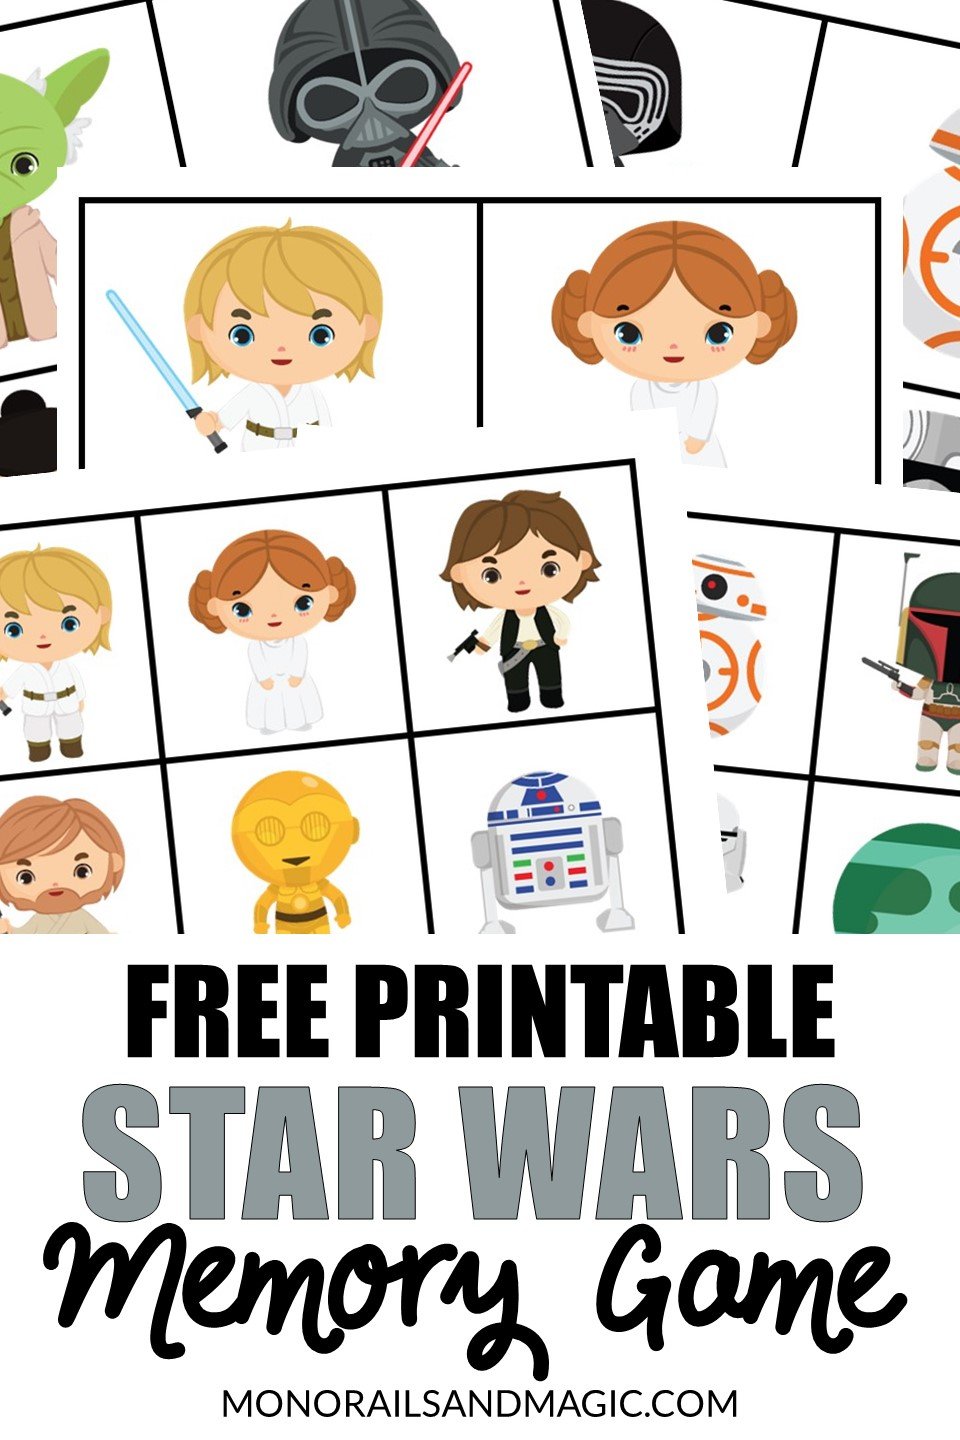 Free printable Star Wars memory game for kids.